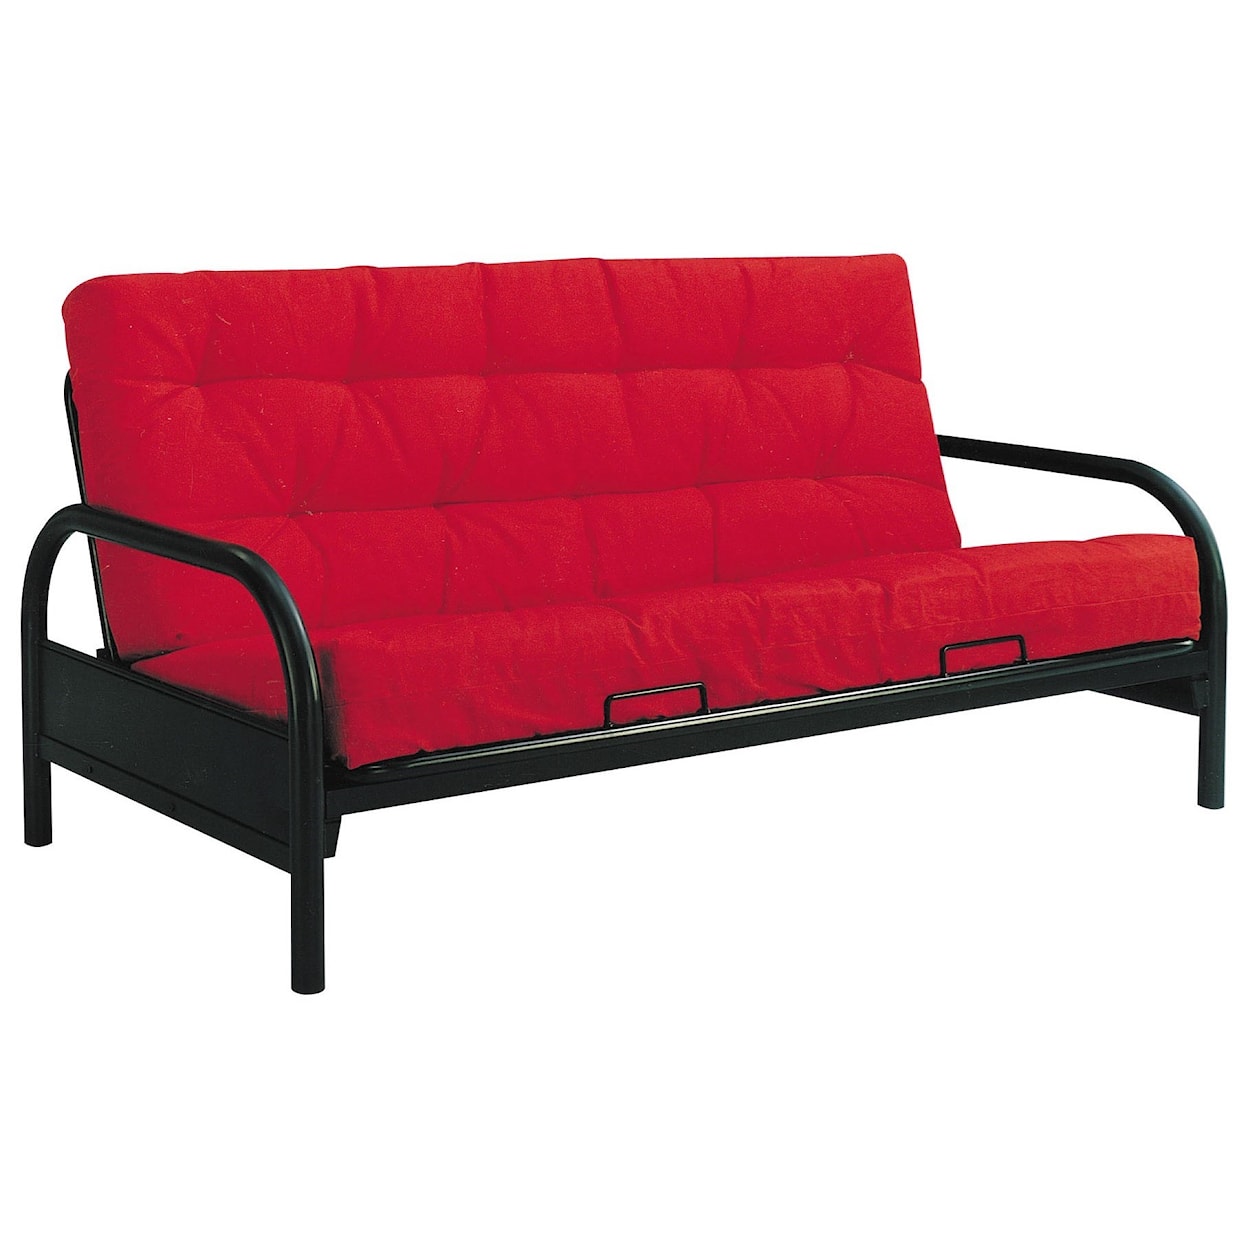 Acme Furniture Alfonso Futon w/ Black Adj Frame, 6" Red Mattress